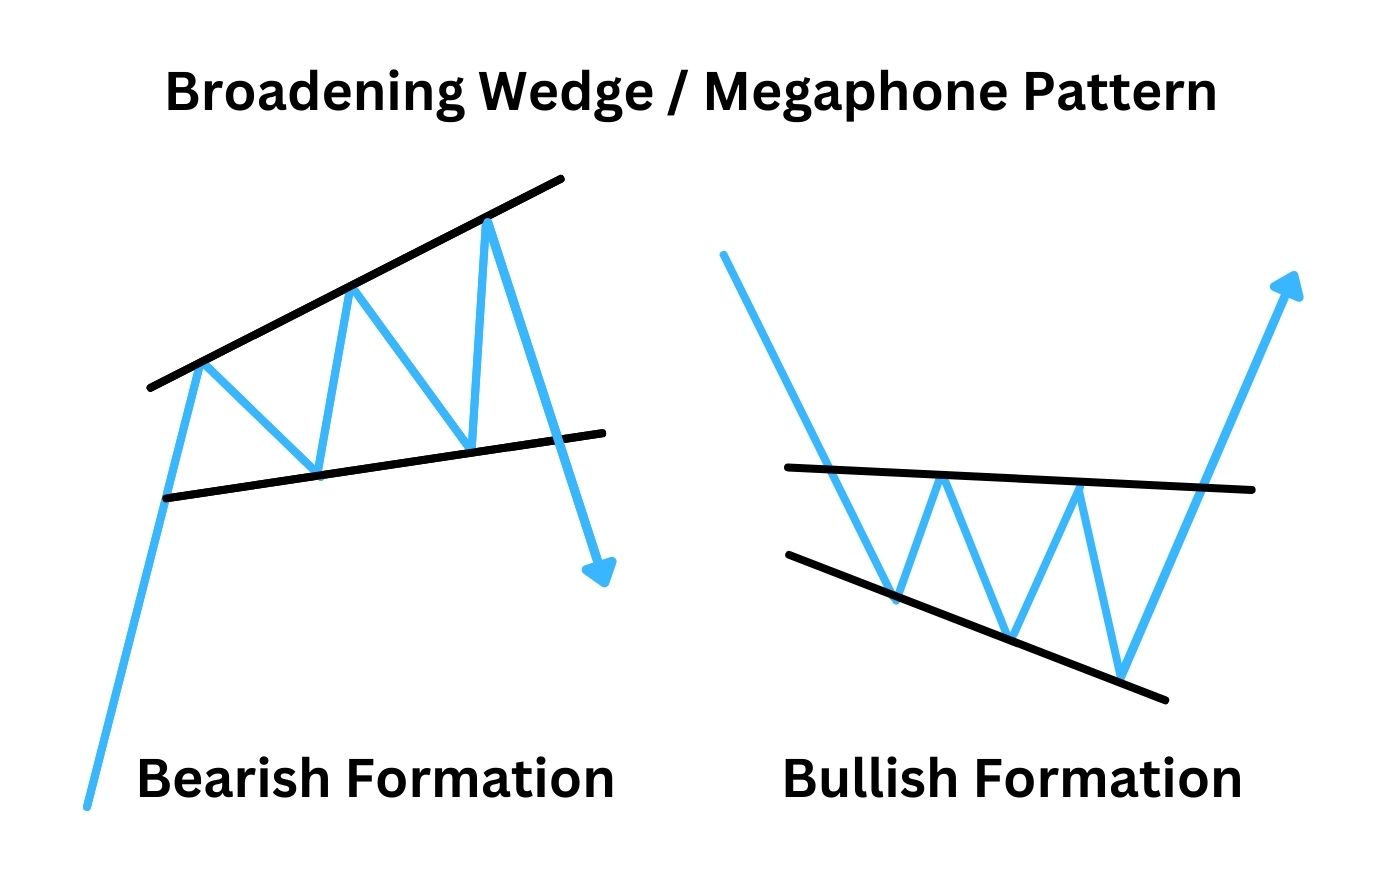 Illustration of broadening wedge in a bullish and bearish formation.